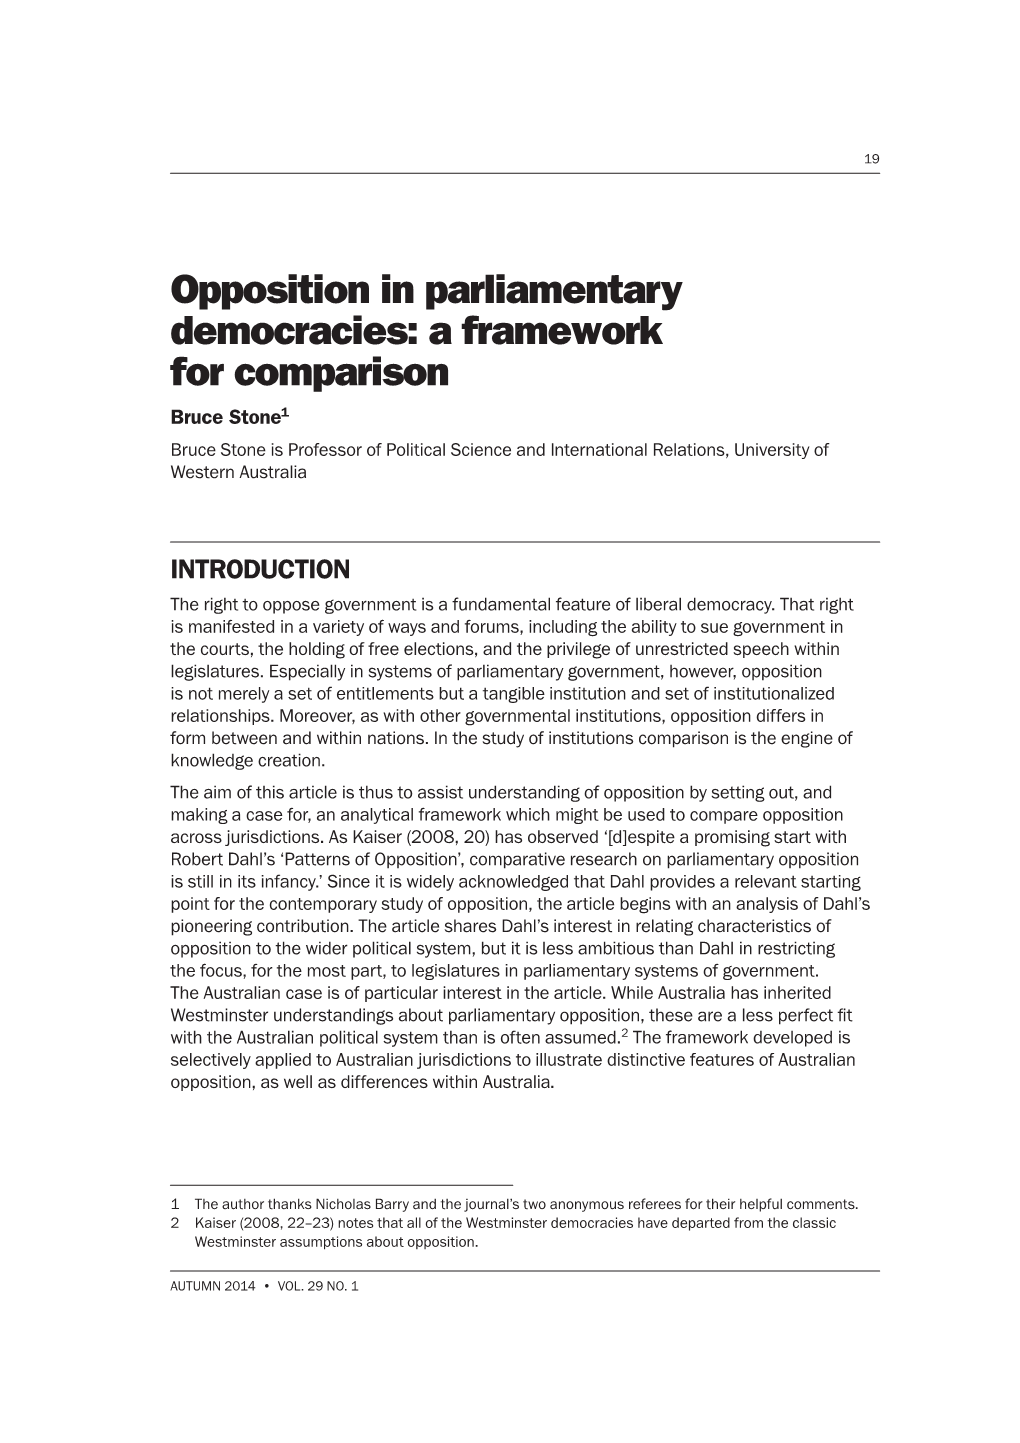 Opposition in Parliamentary Democracies: a Framework